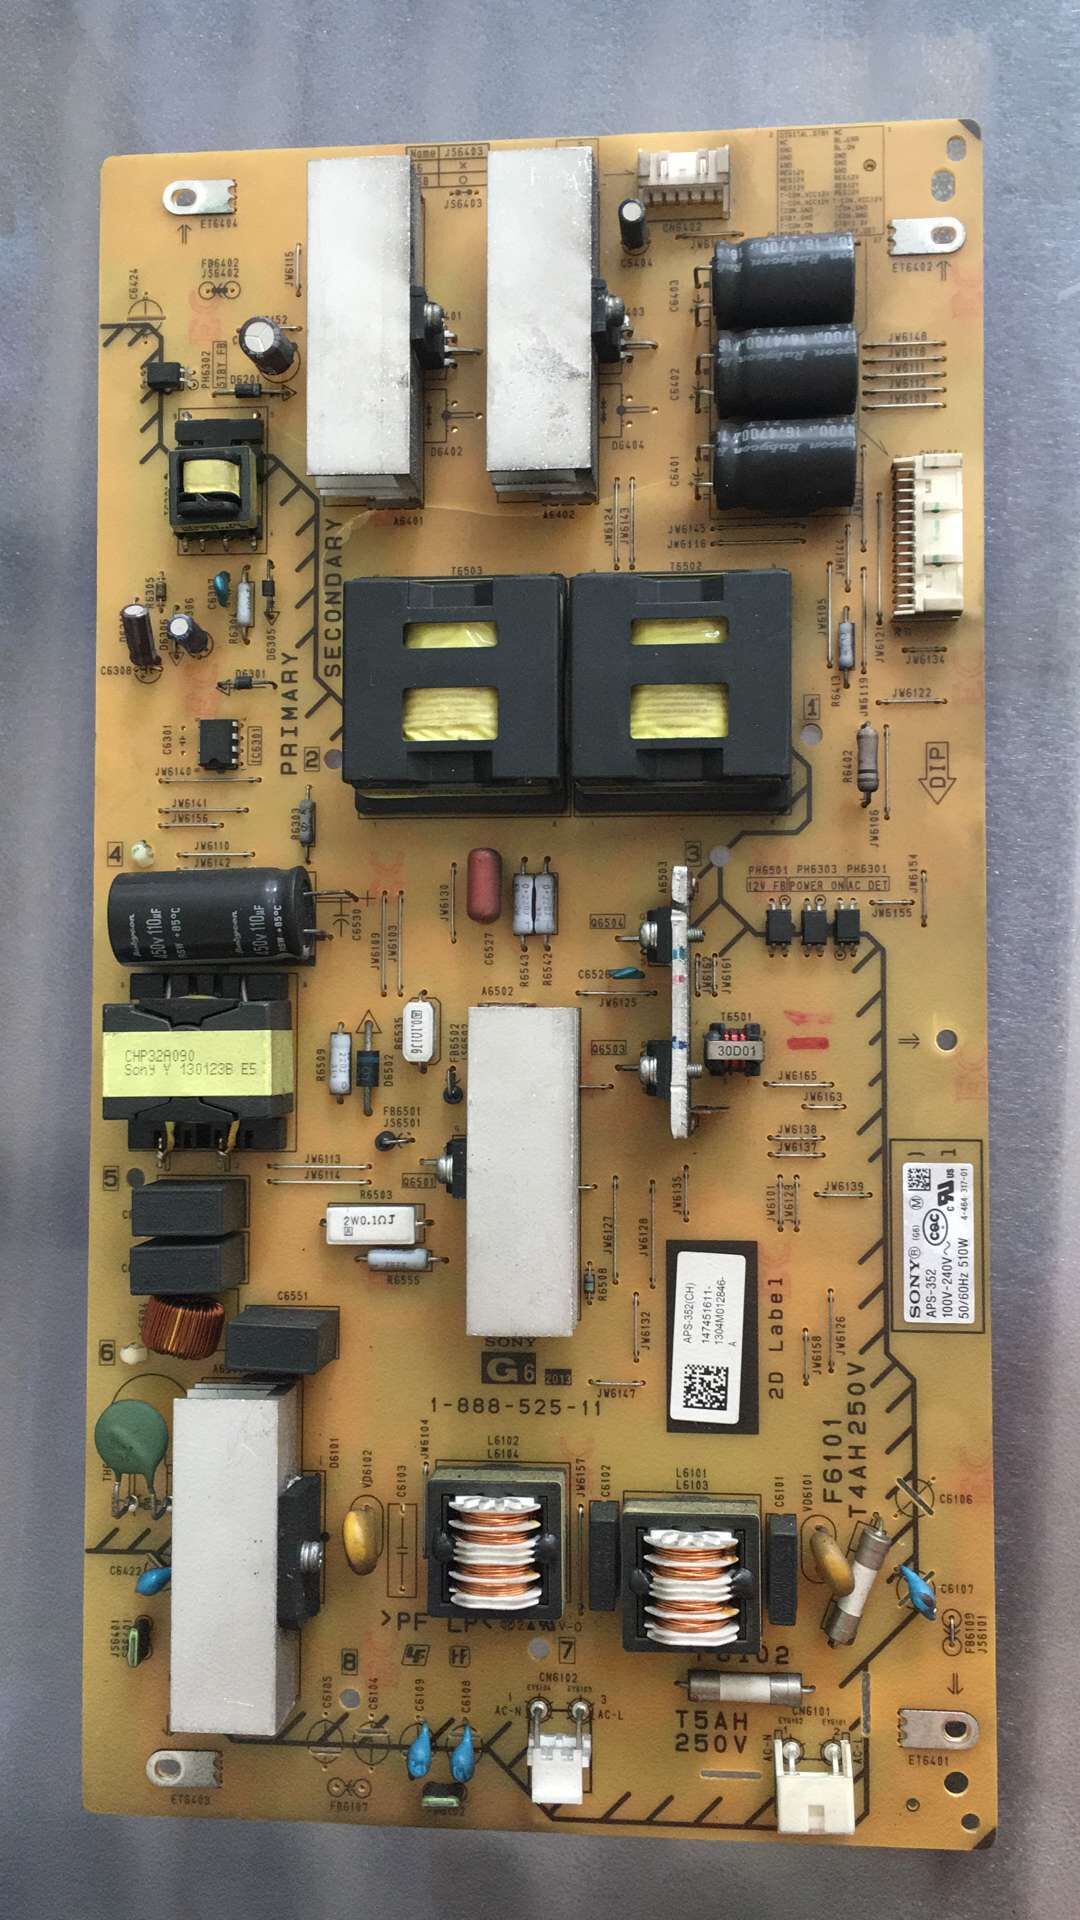 Sony 1-474-517-11 (APS-353 APS-353(CH)) Power Supply Unit